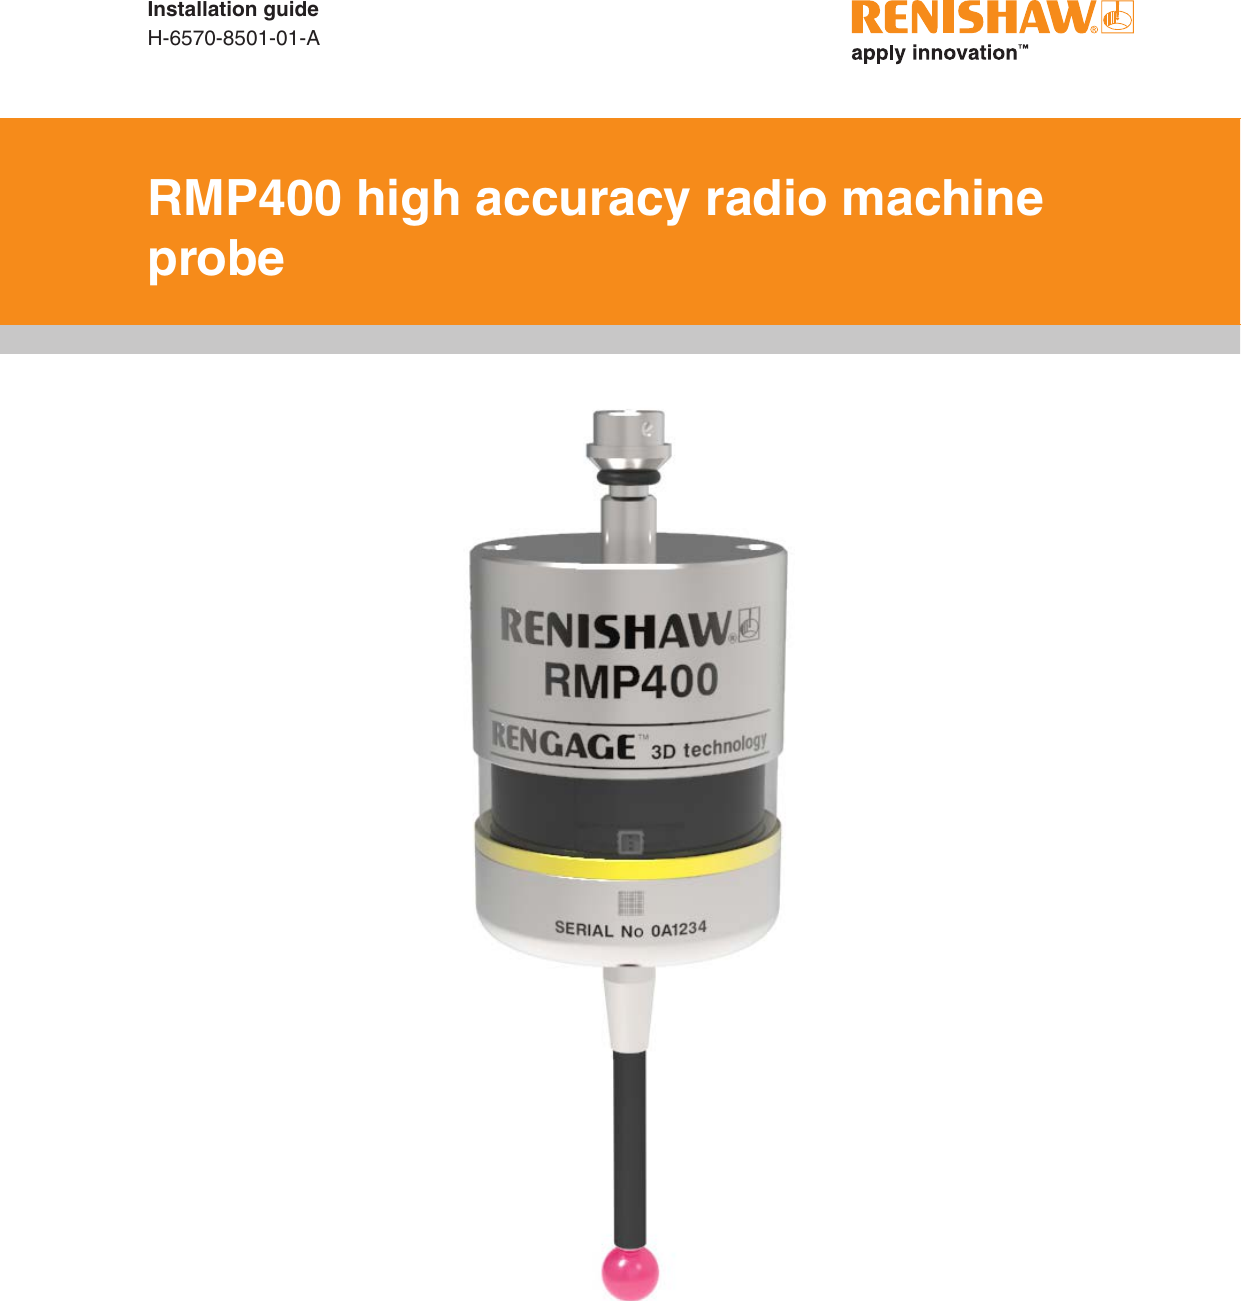 RMP400 high accuracy radio machine probeInstallation guideH-6570-8501-01-ADraft 5 16/04/18